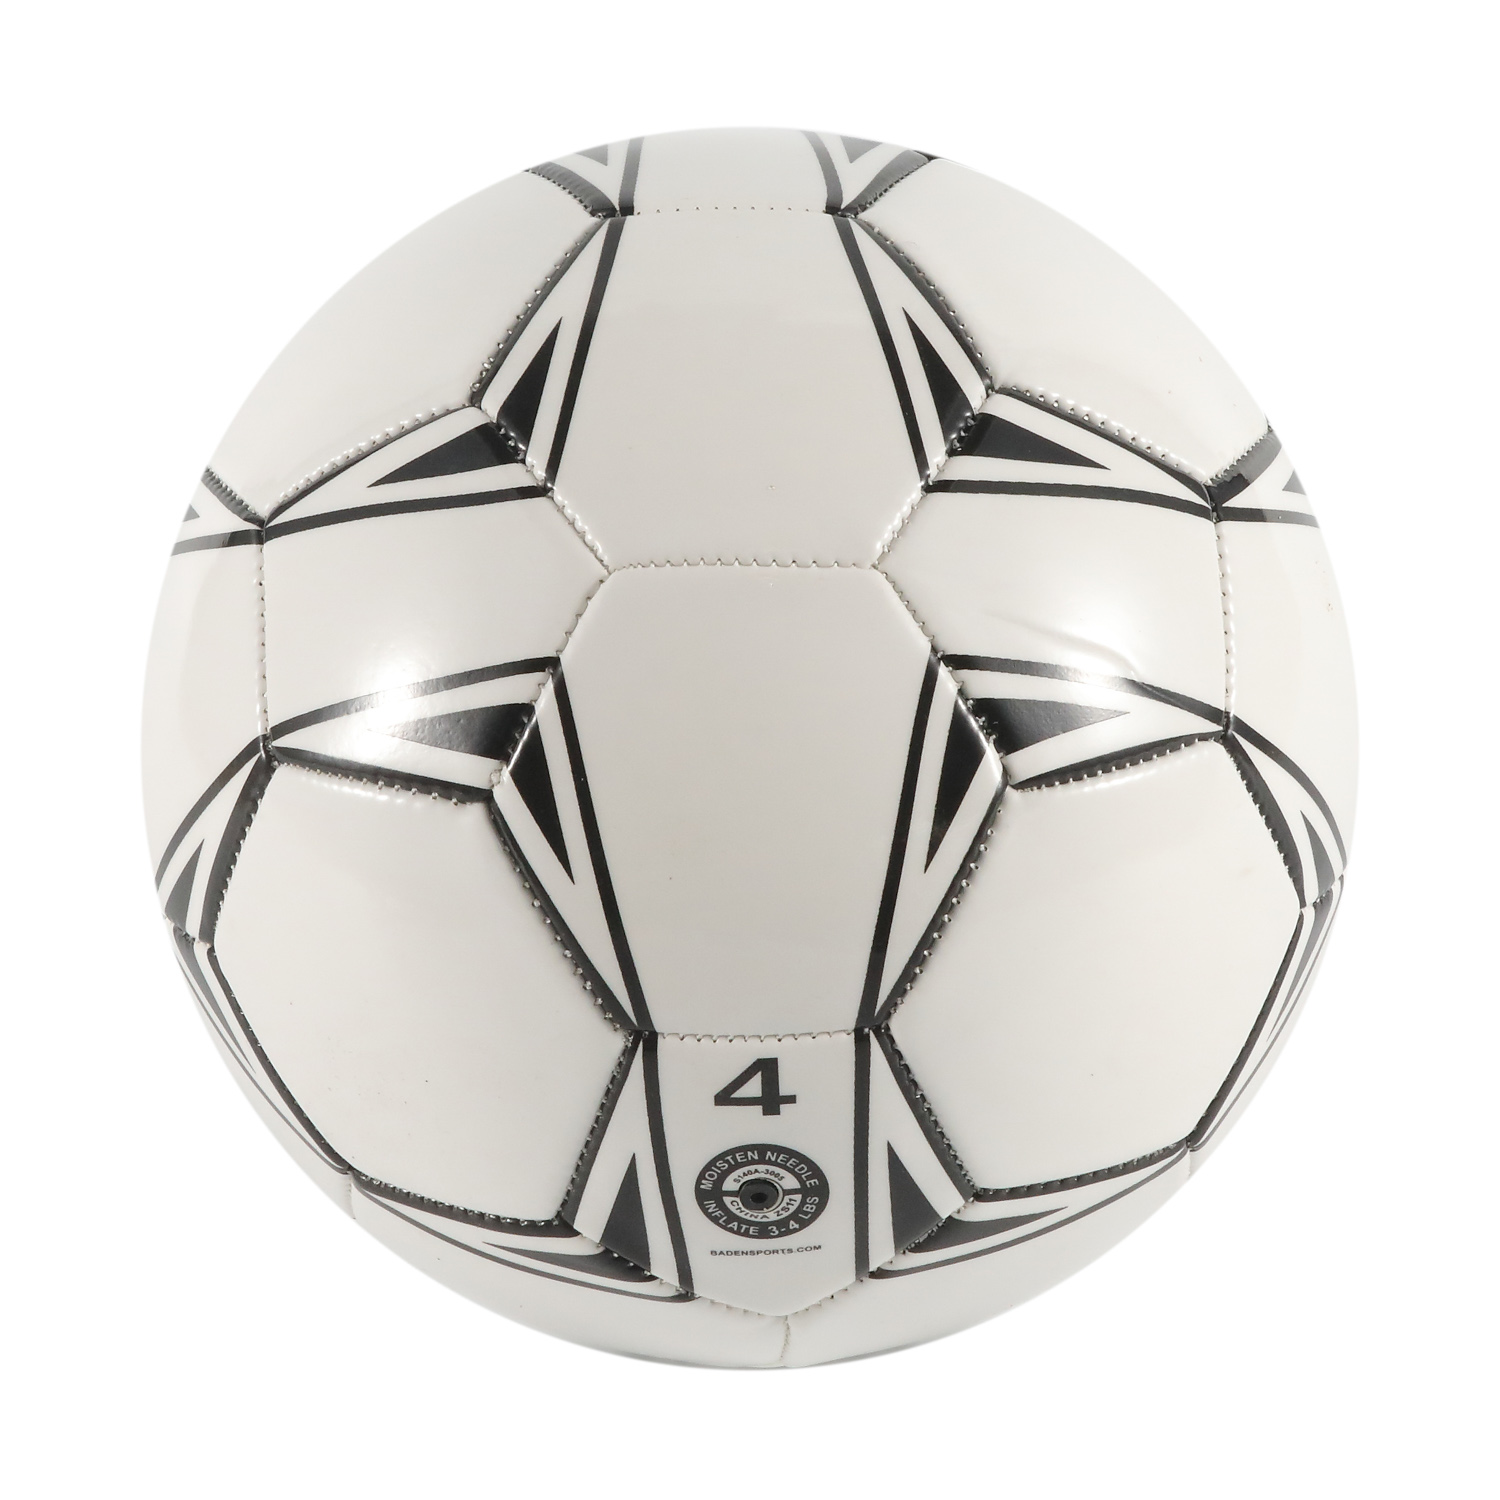 Wholesale Durable Using PU PVC TPU Football Soccer Ball